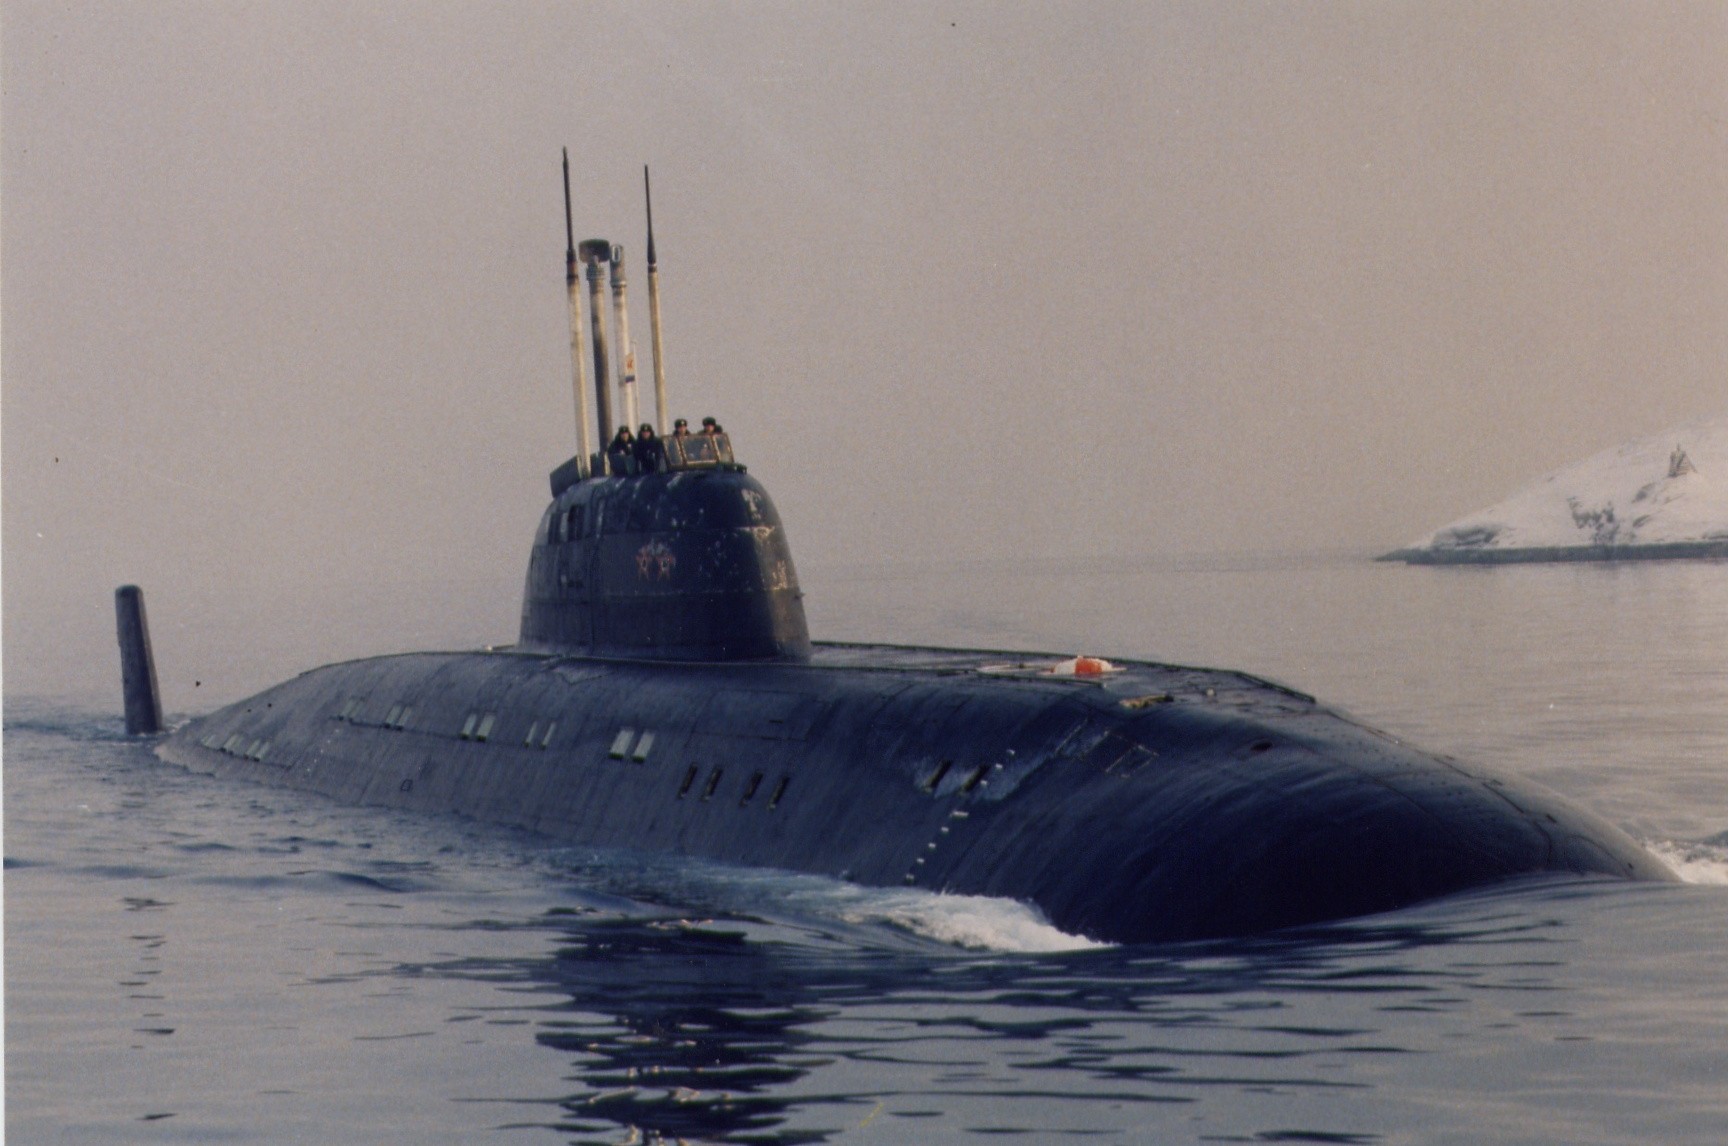 Пл тка. Подводная лодка 671 РТМК. АПЛ щука 671 РТМ. 671 РТМК проект подводная лодка. АПЛ проекта 671 Ерш.